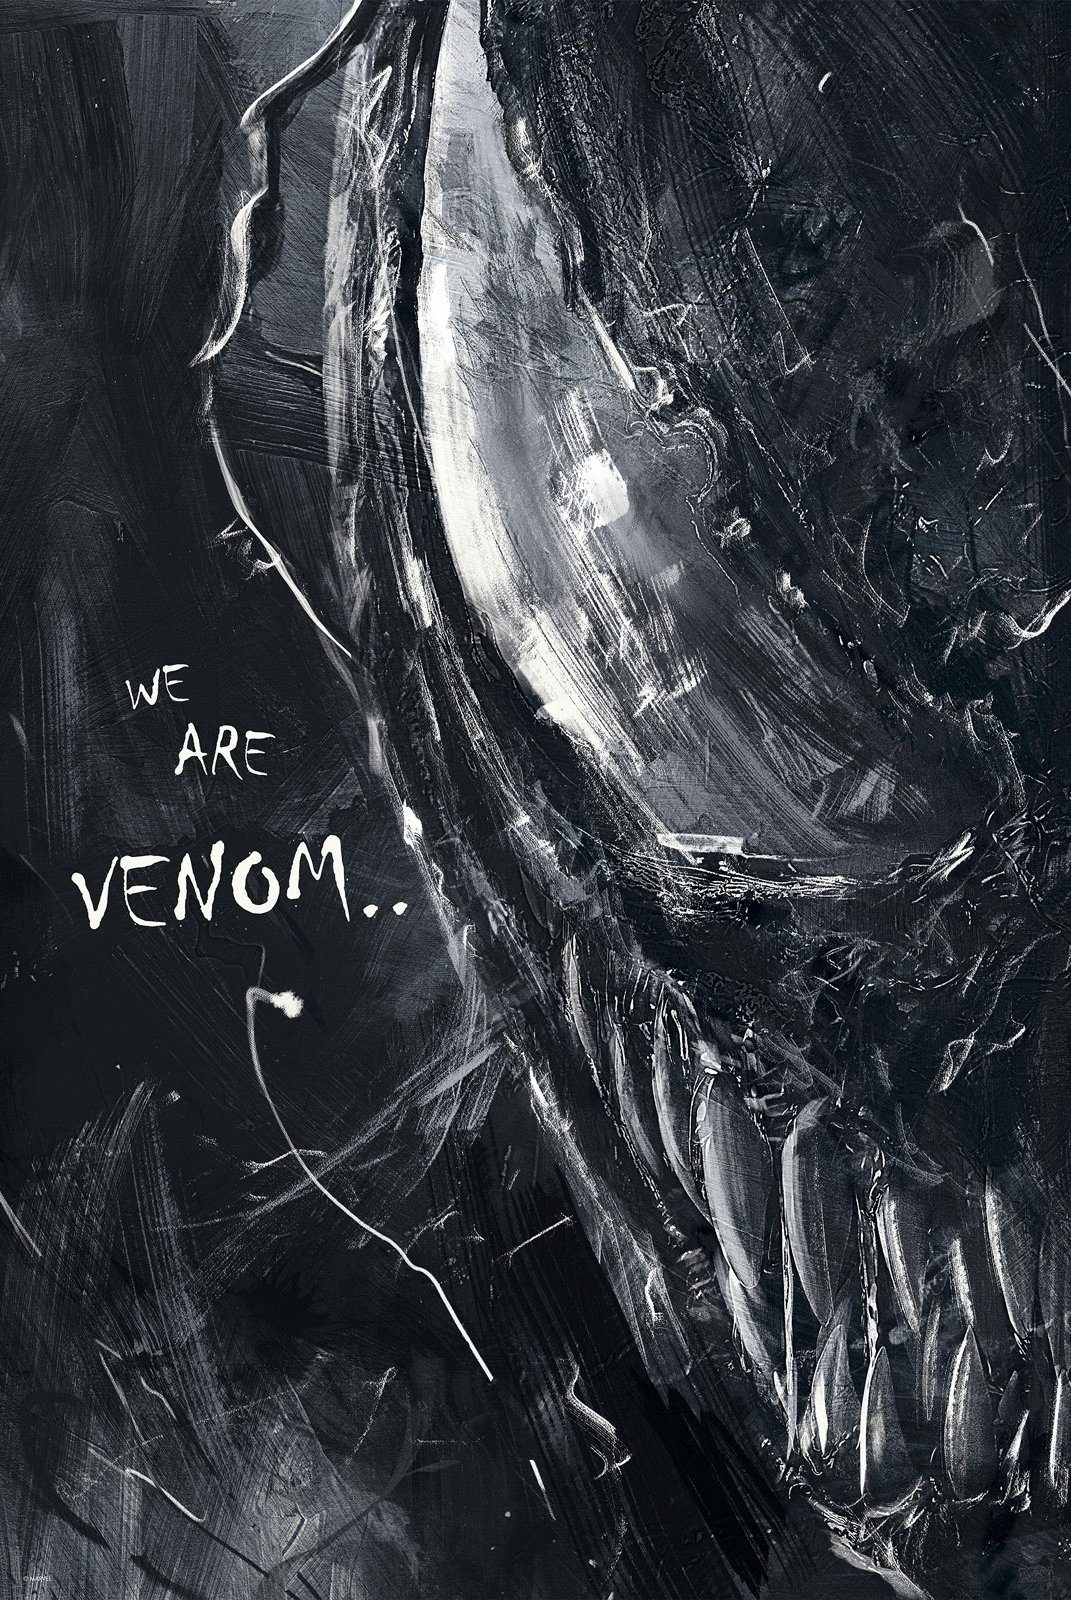 Venom Erik Marvel x Venom Are Poster 91,5 61 Poster cm We Grupo